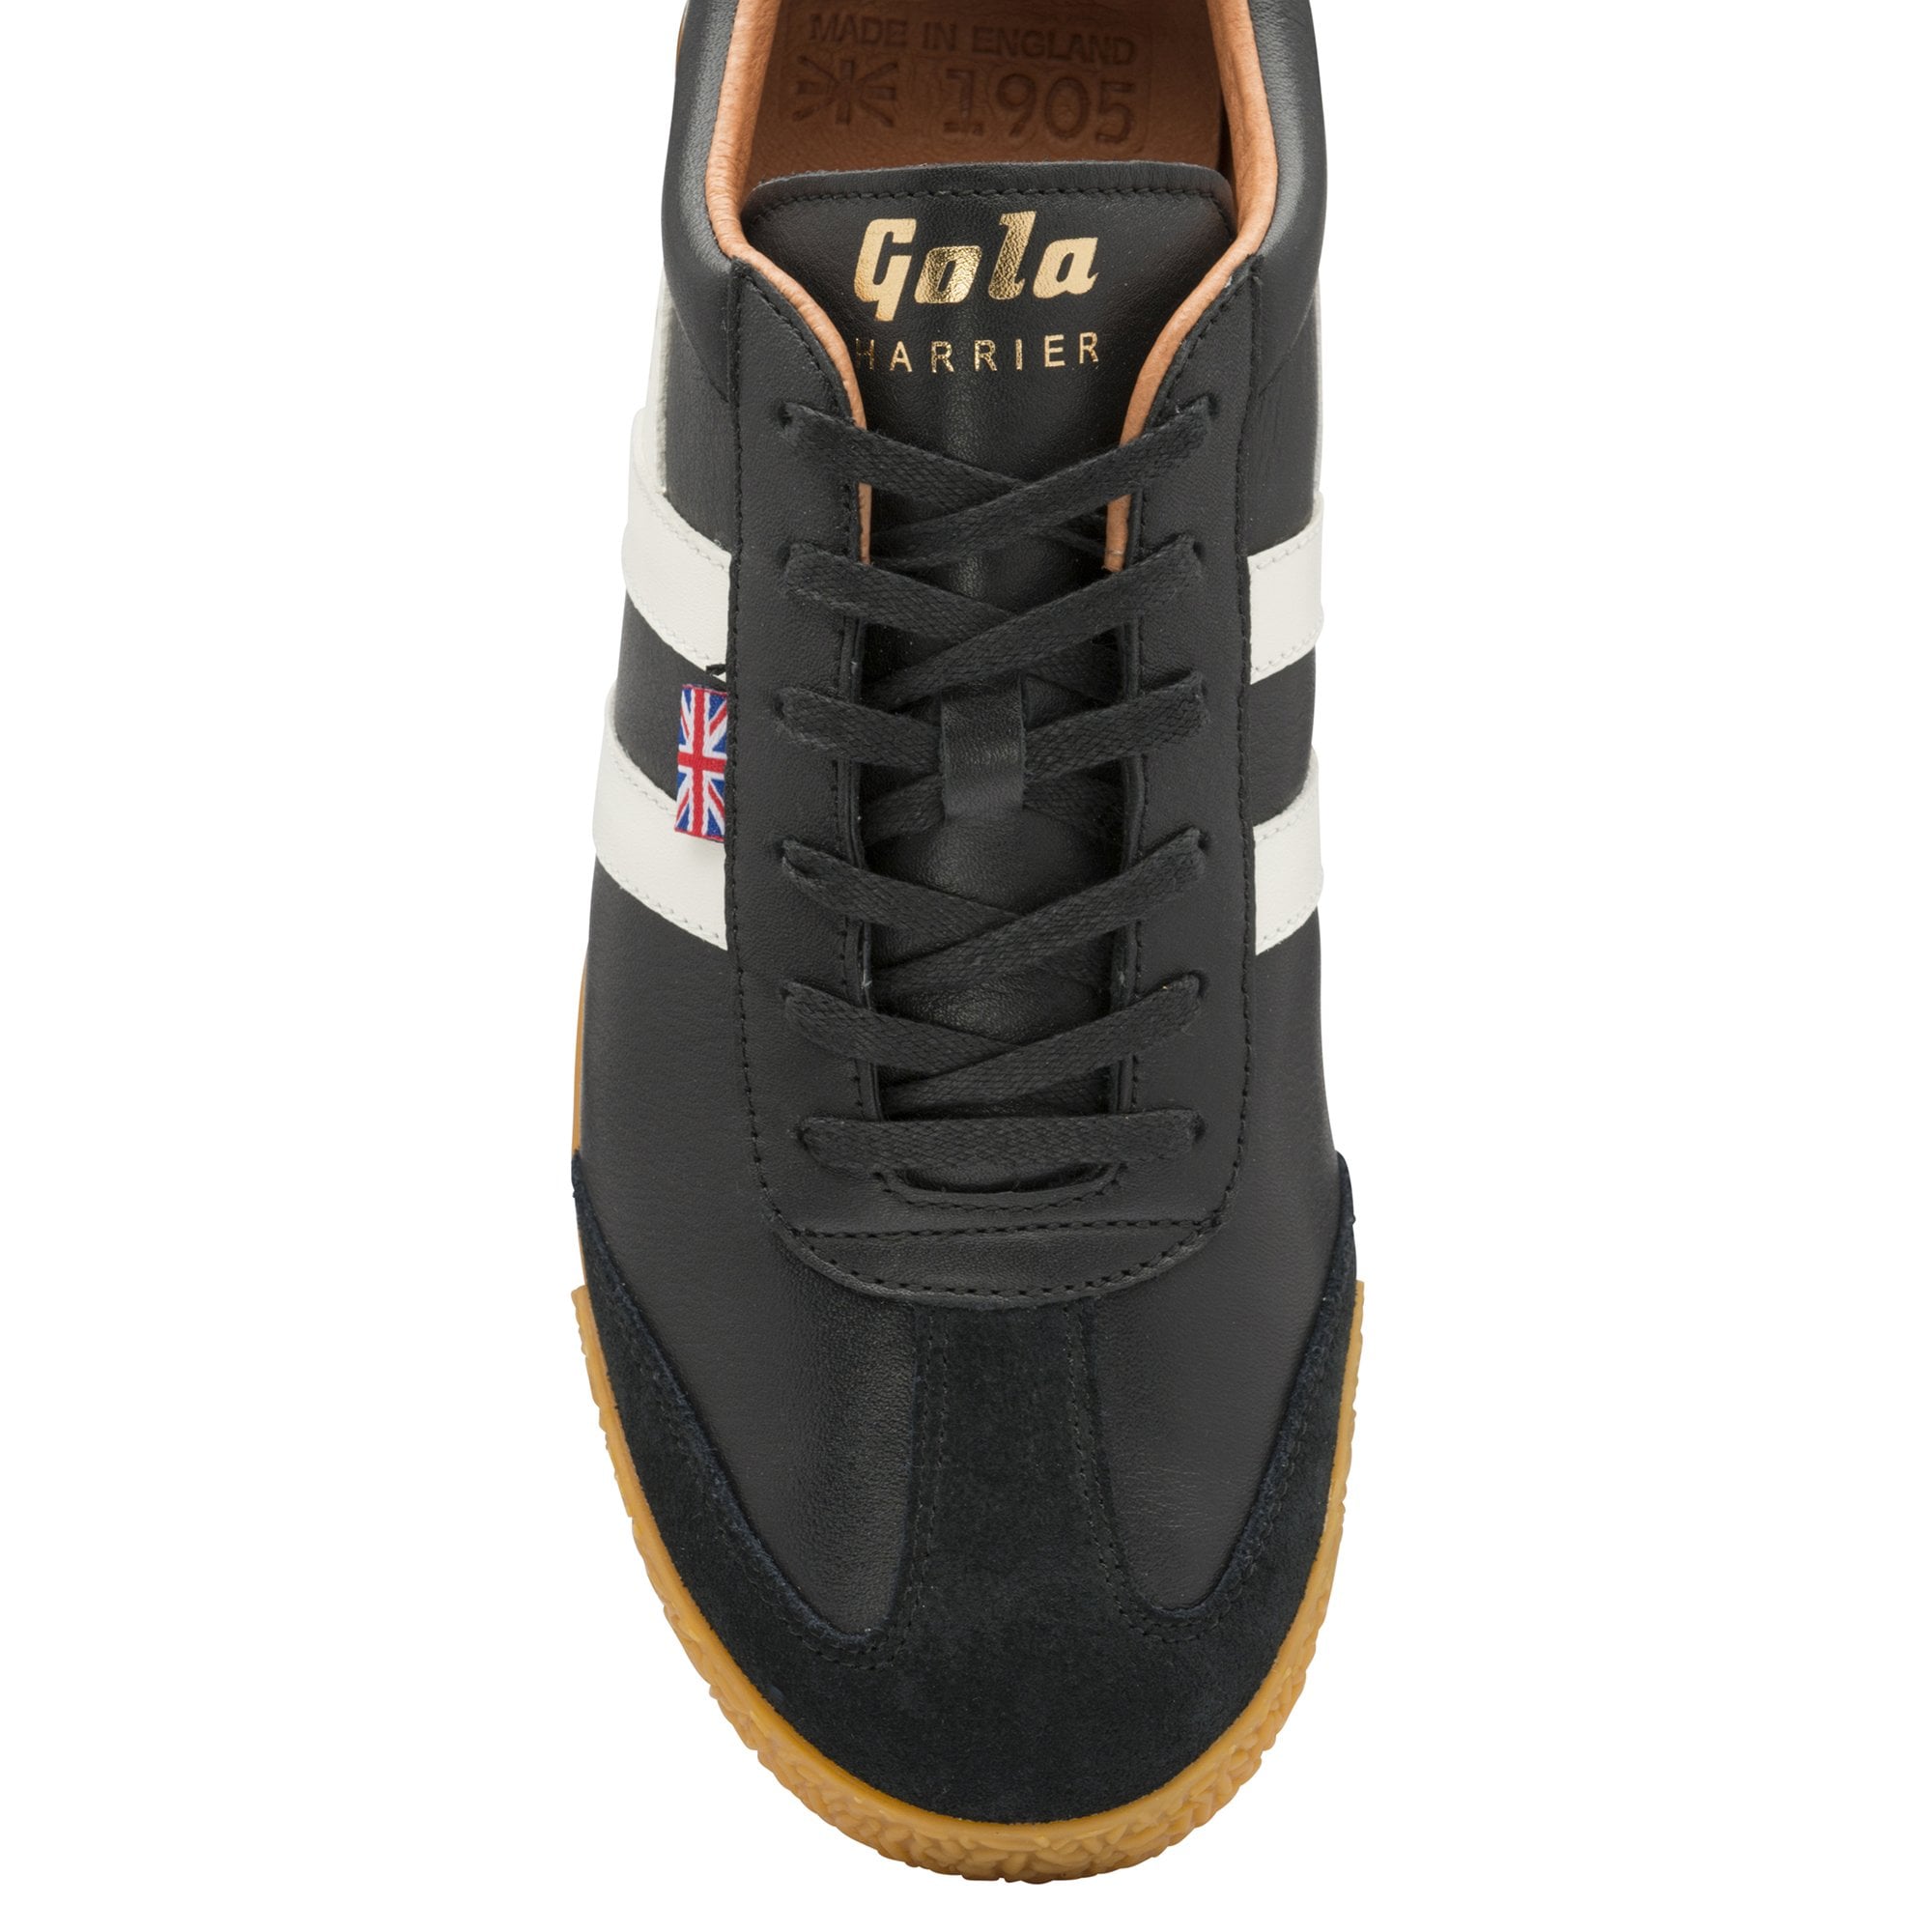 Gola Made in England – 1905 Herren Harrier Elite Sneaker